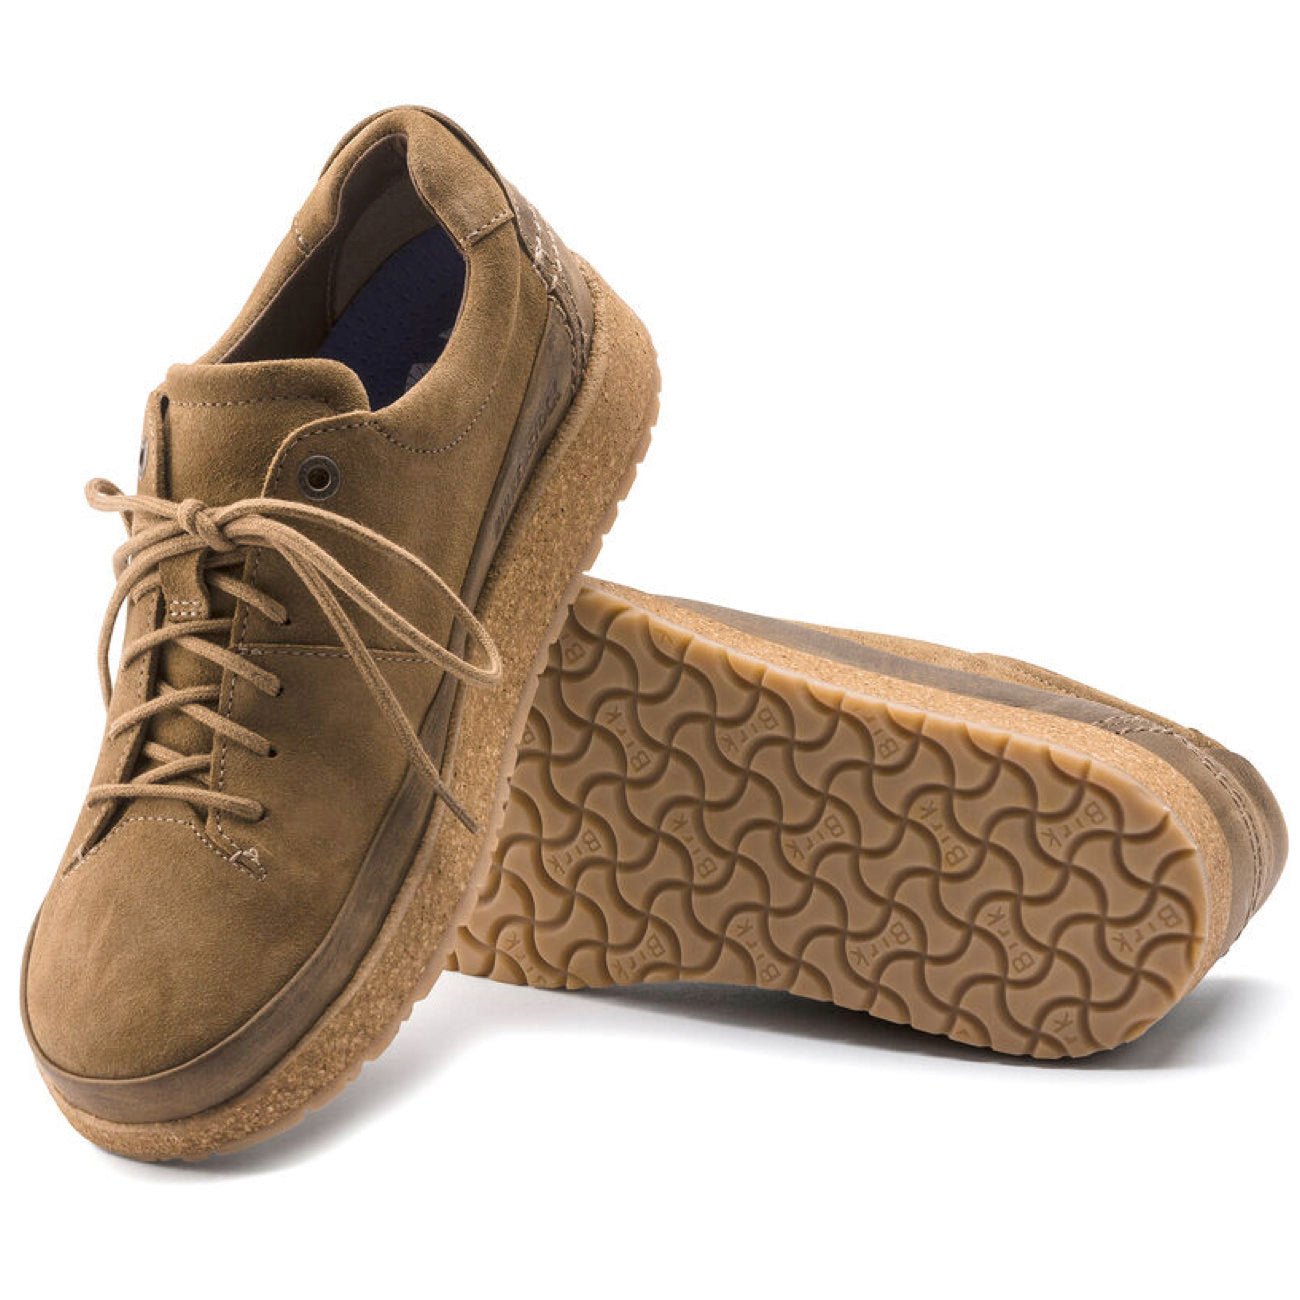 Birkenstock Shoes, Honnef Low, Suede Leather, Regular Fit, Tea Suede Shoes Birkenstock Seasonal Tea Suede 40 